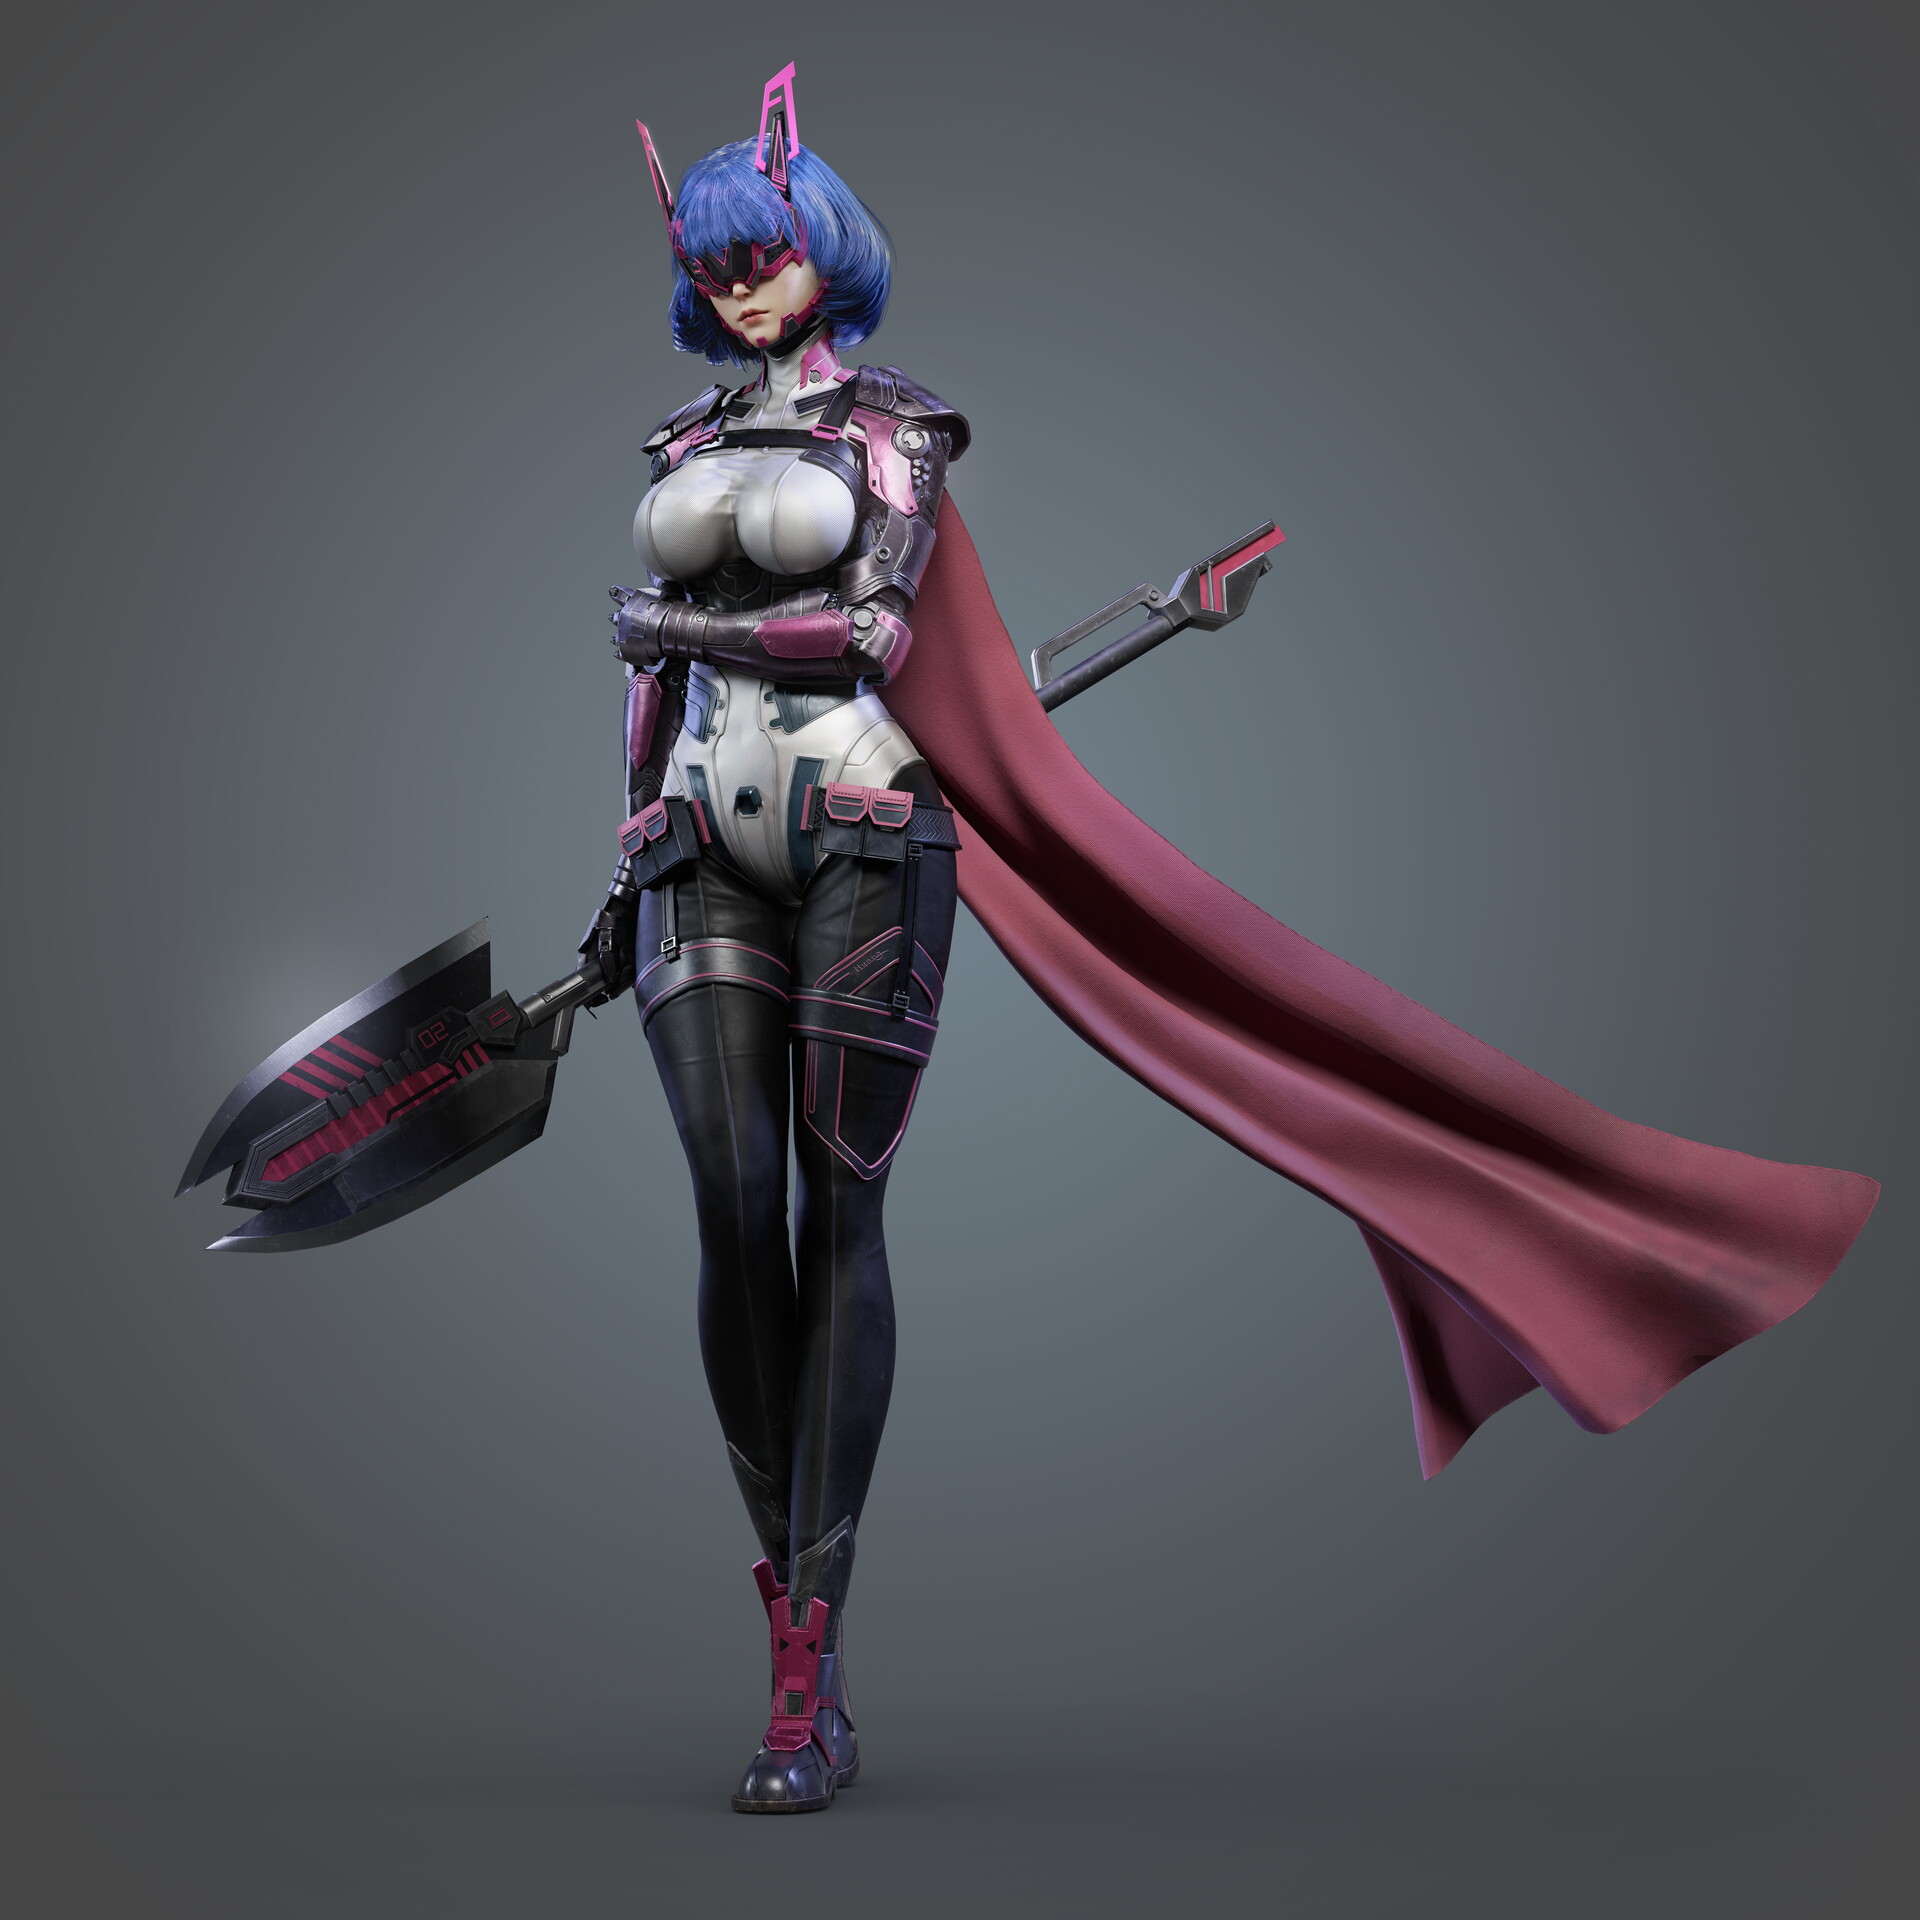 General 1920x1920 Ma Chui Chui CGI women blue hair cyberpunk visors cape simple background minimalism weapon